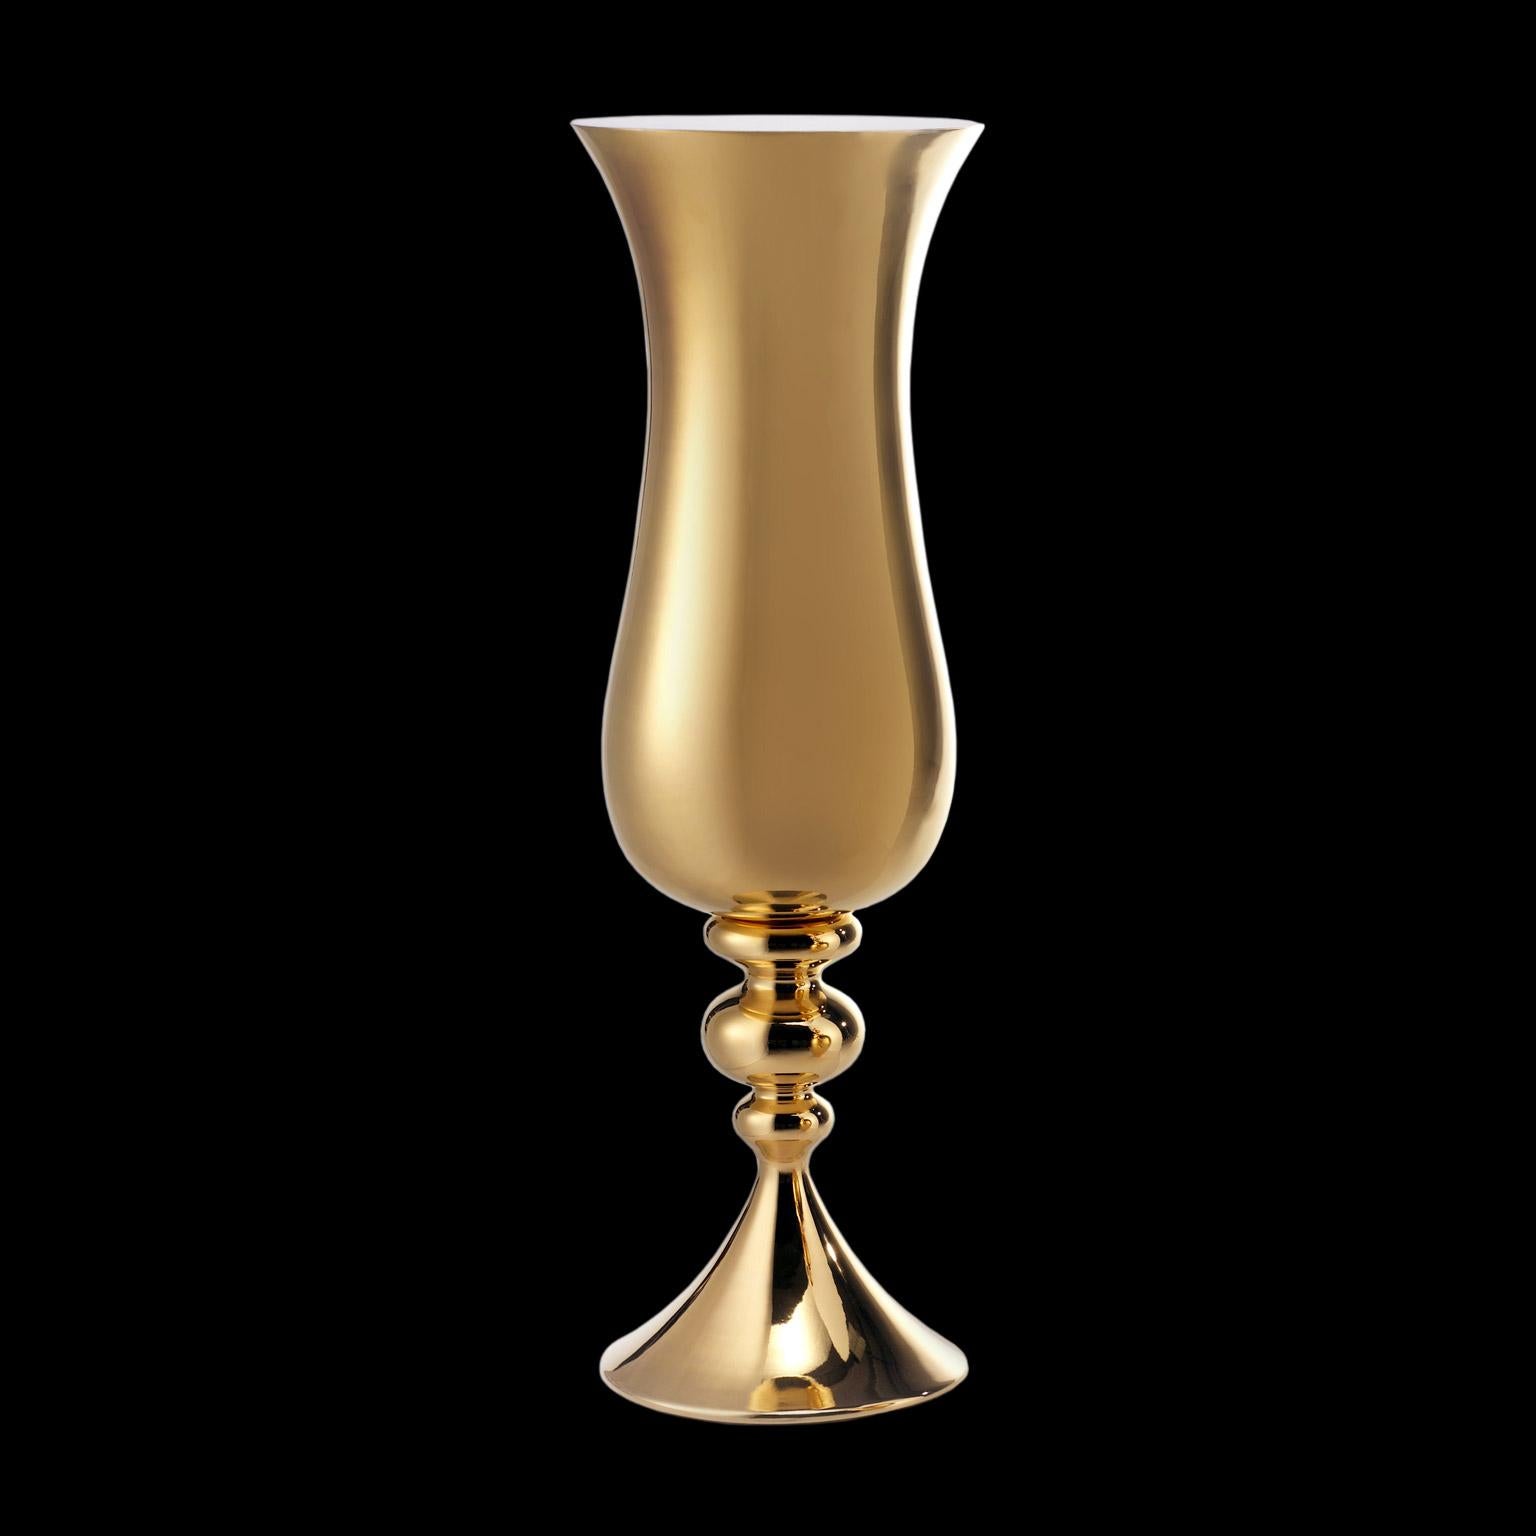 Ceramic vase LOTH handcrafted in 24-karat gold, white glazed inside

cod. CP050 
measures: H. 140.0 cm. - Dm. 40.0 cm.